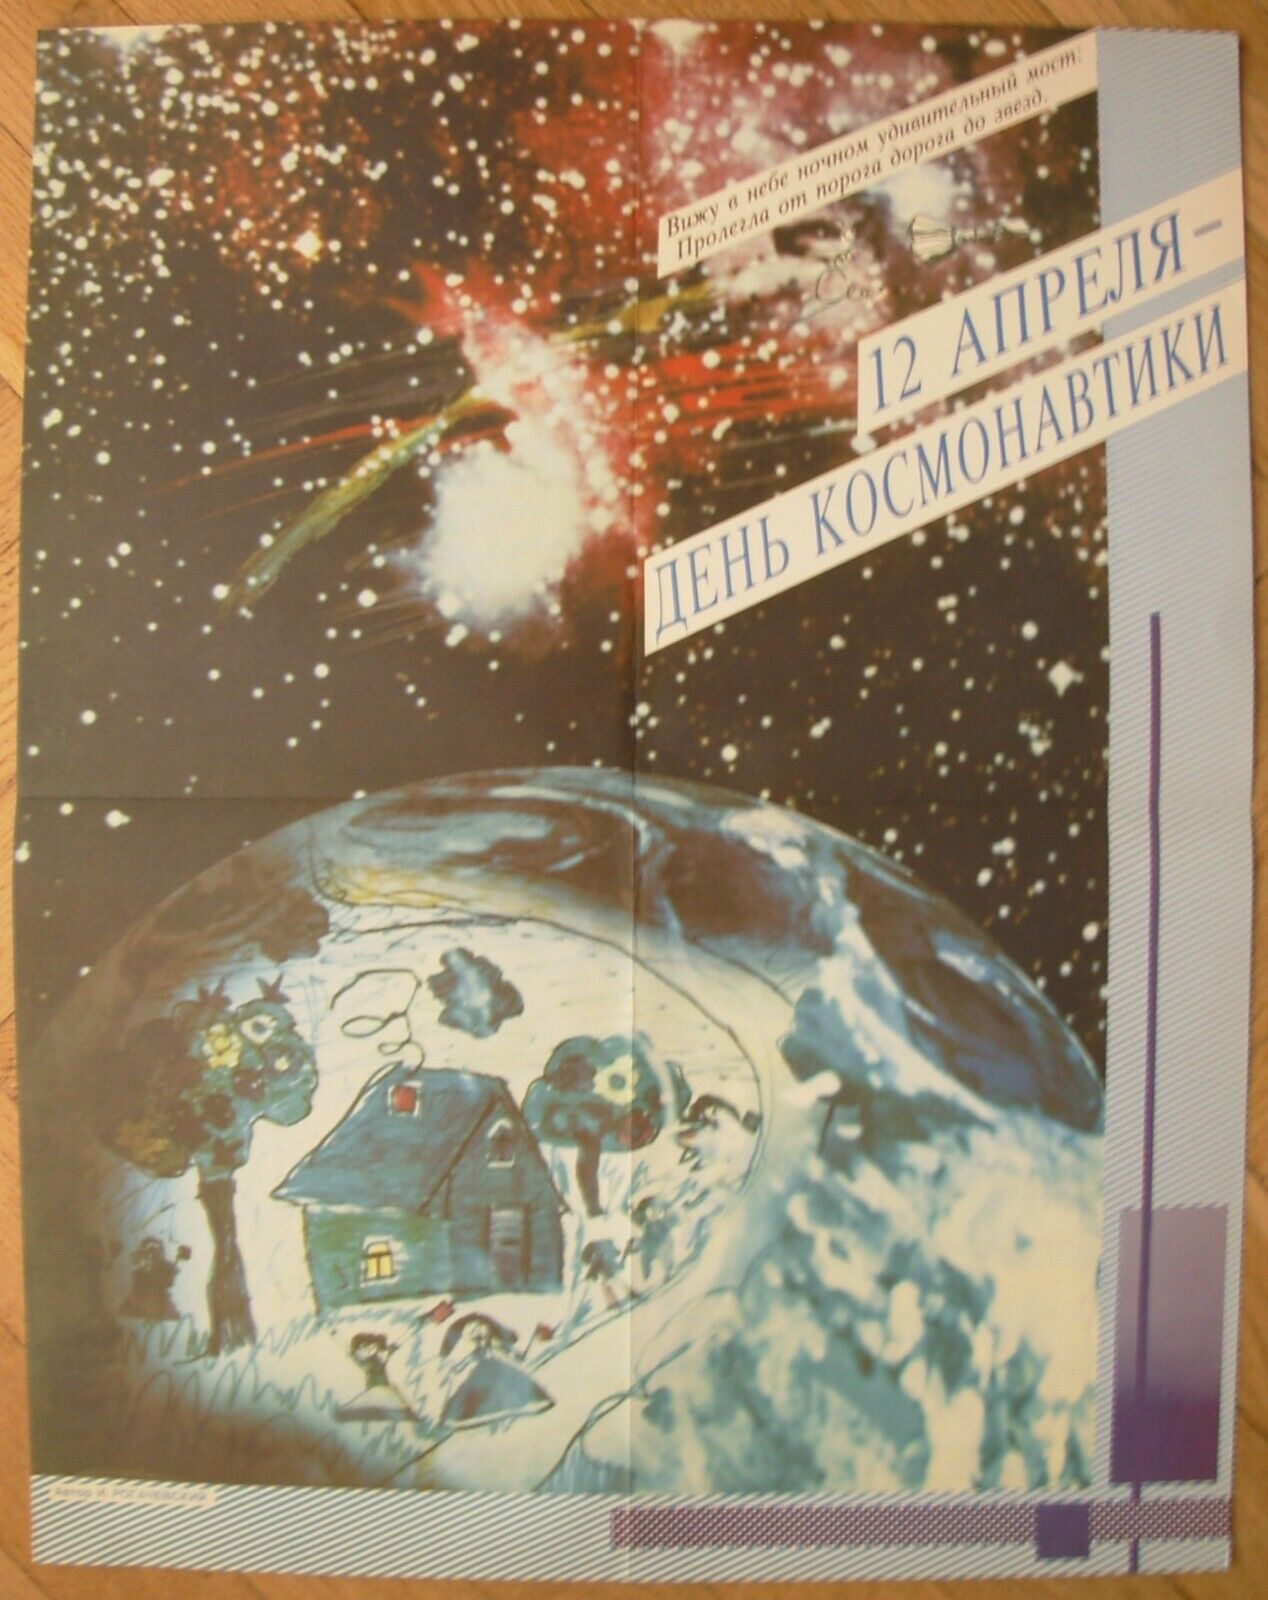 ORIGINAL SOVIET Russian POSTER 12 April - Cosmonautics Day USSR space